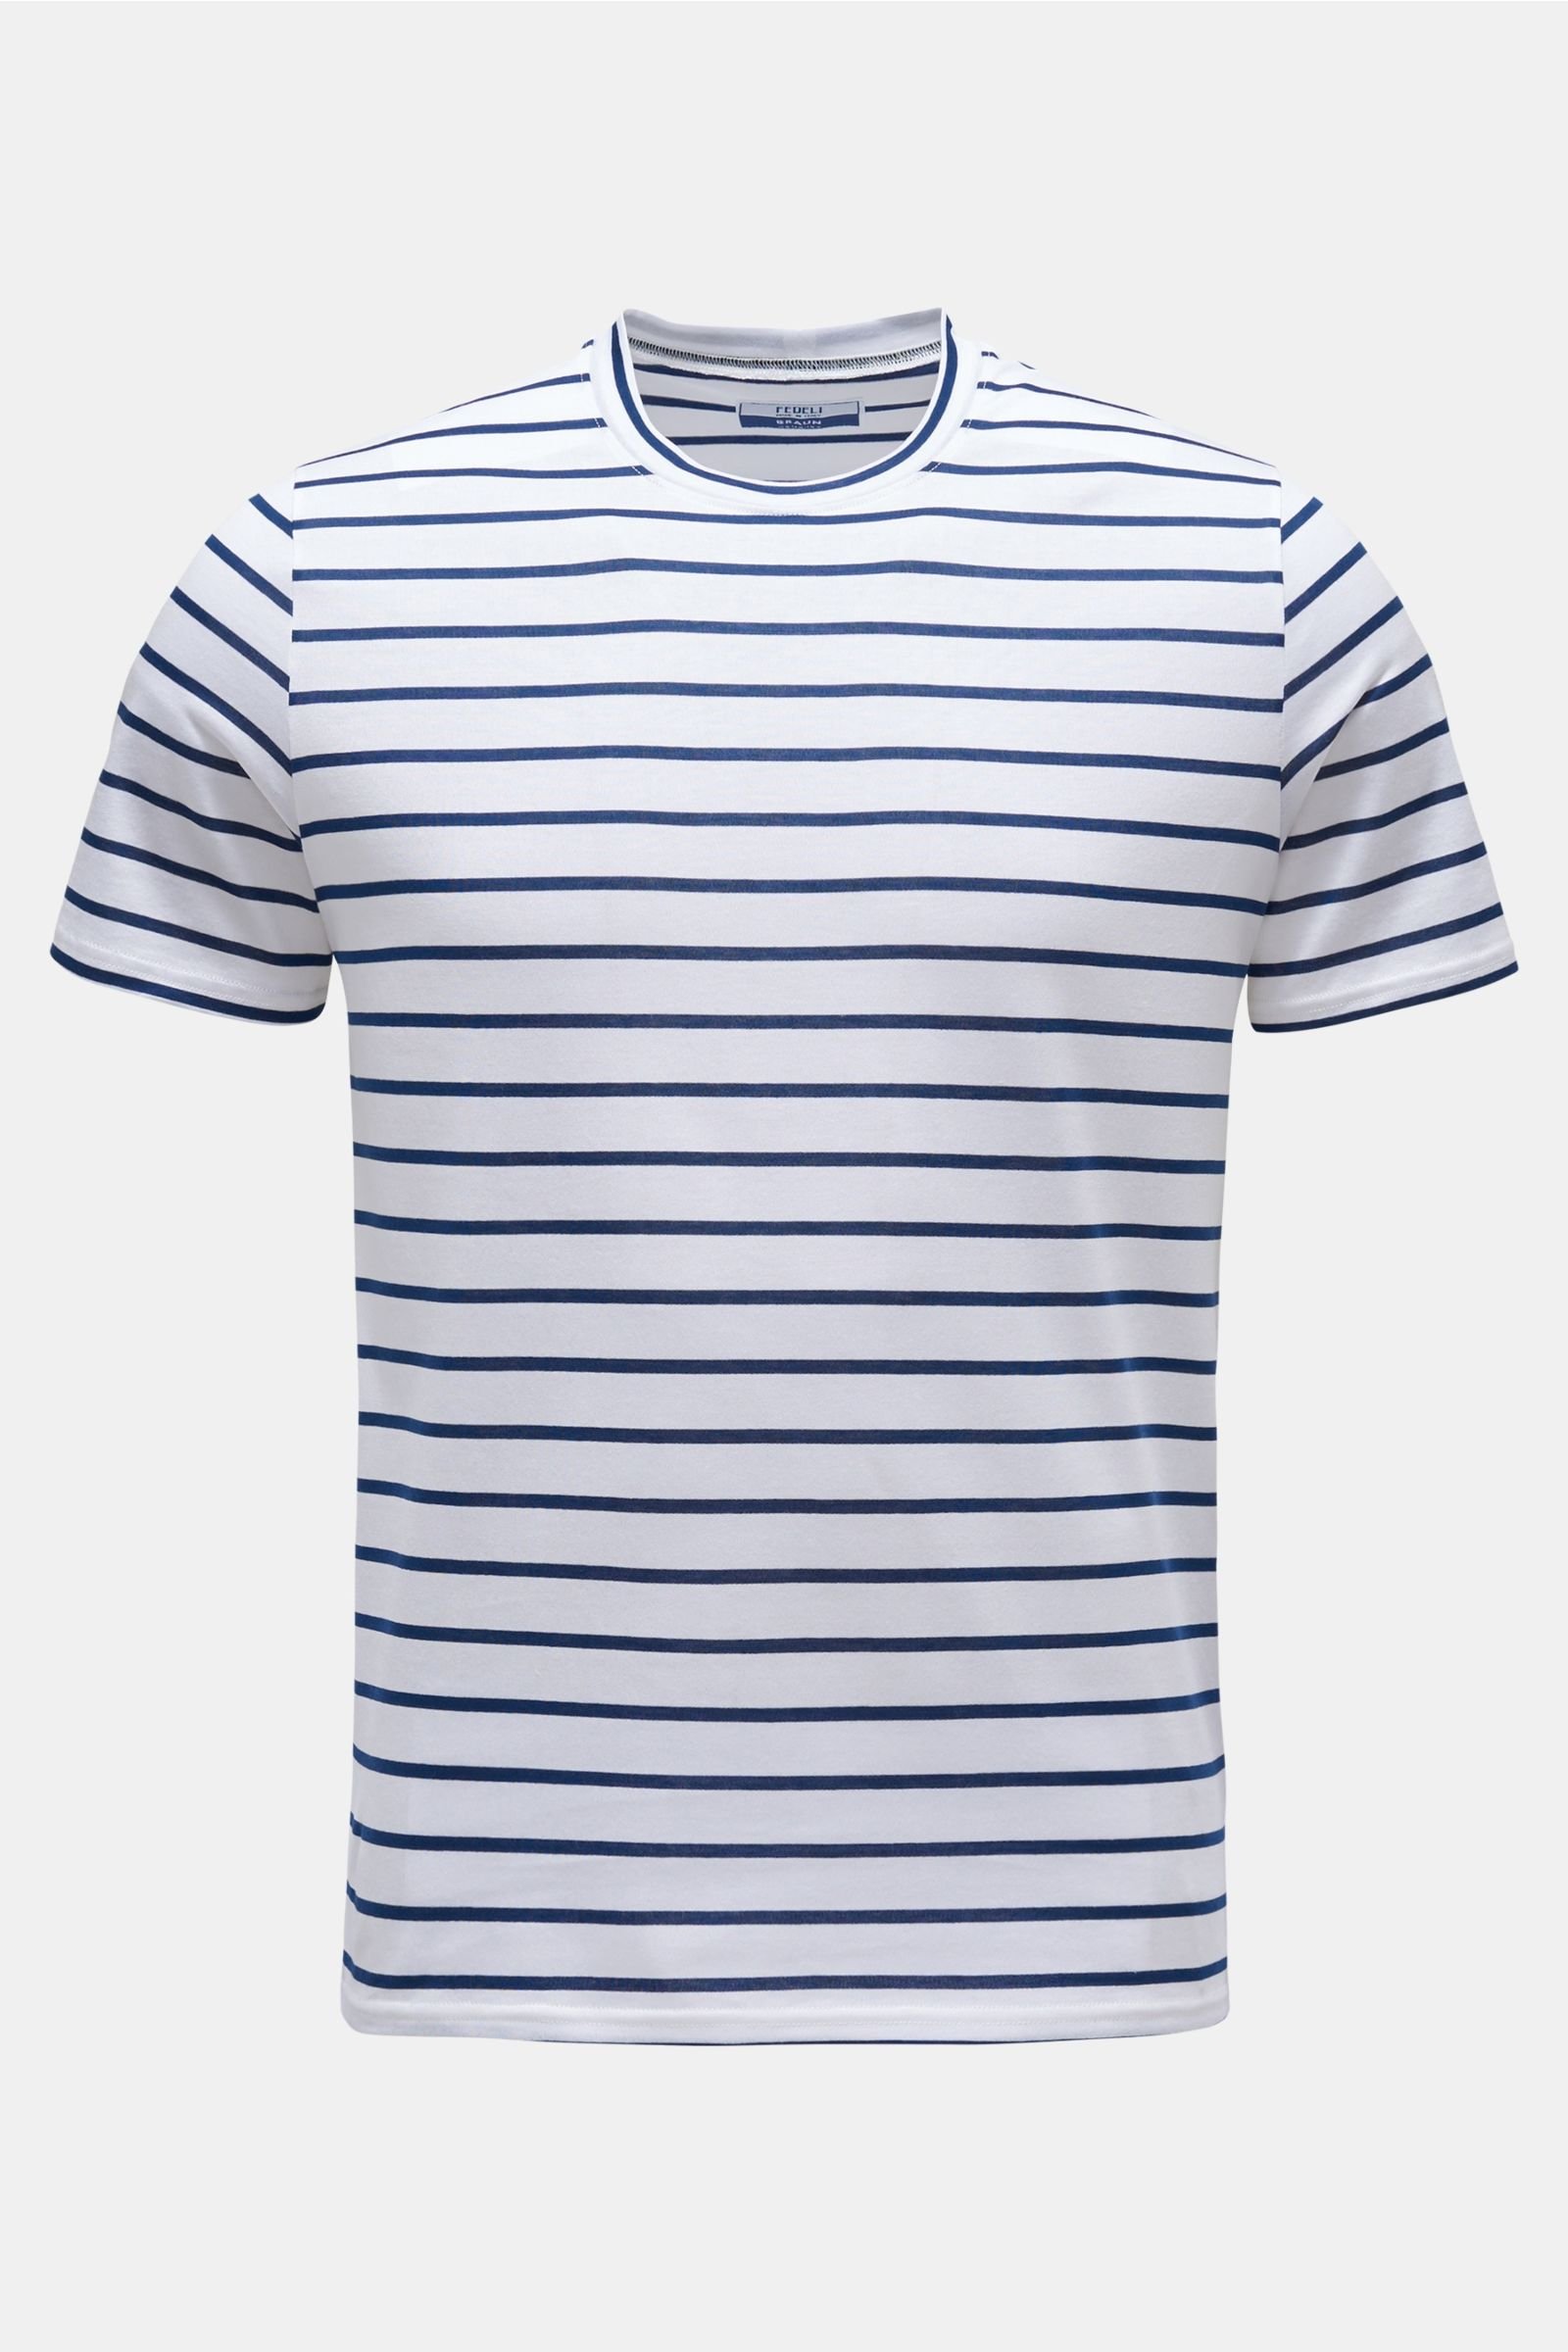 Crew neck T-shirt 'Gary' navy/white striped